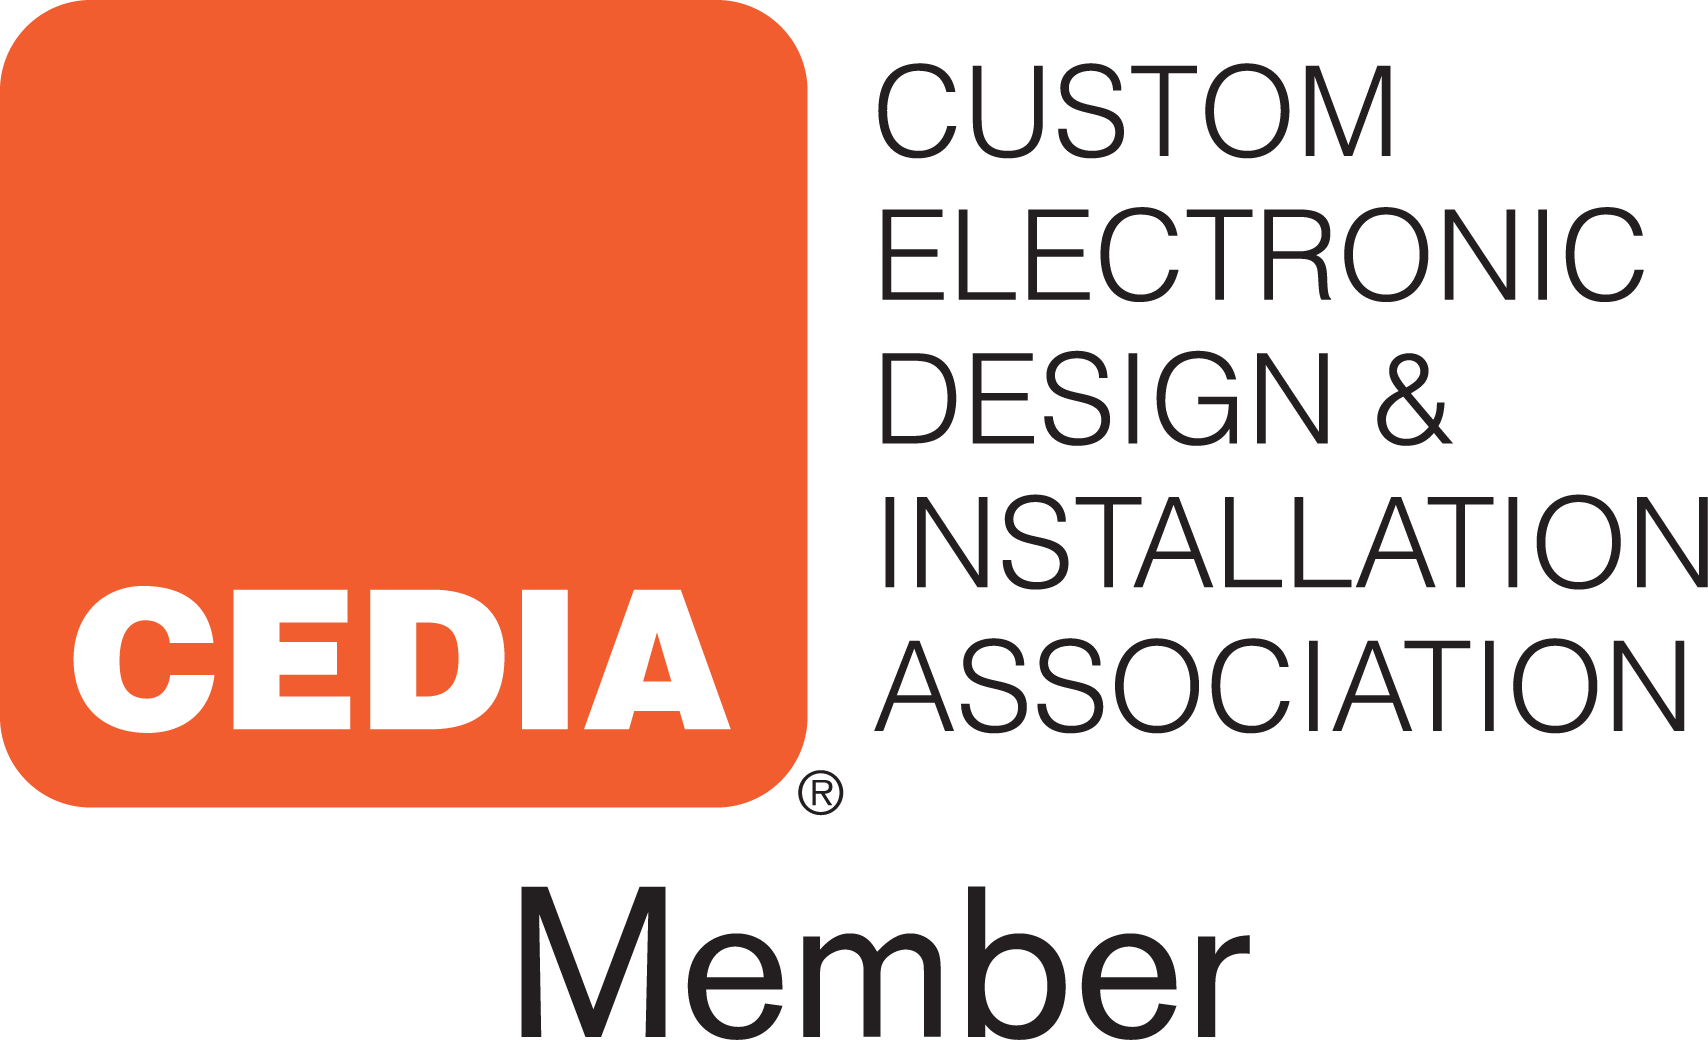 Custom Electronic Design & Installation Association Member Logo